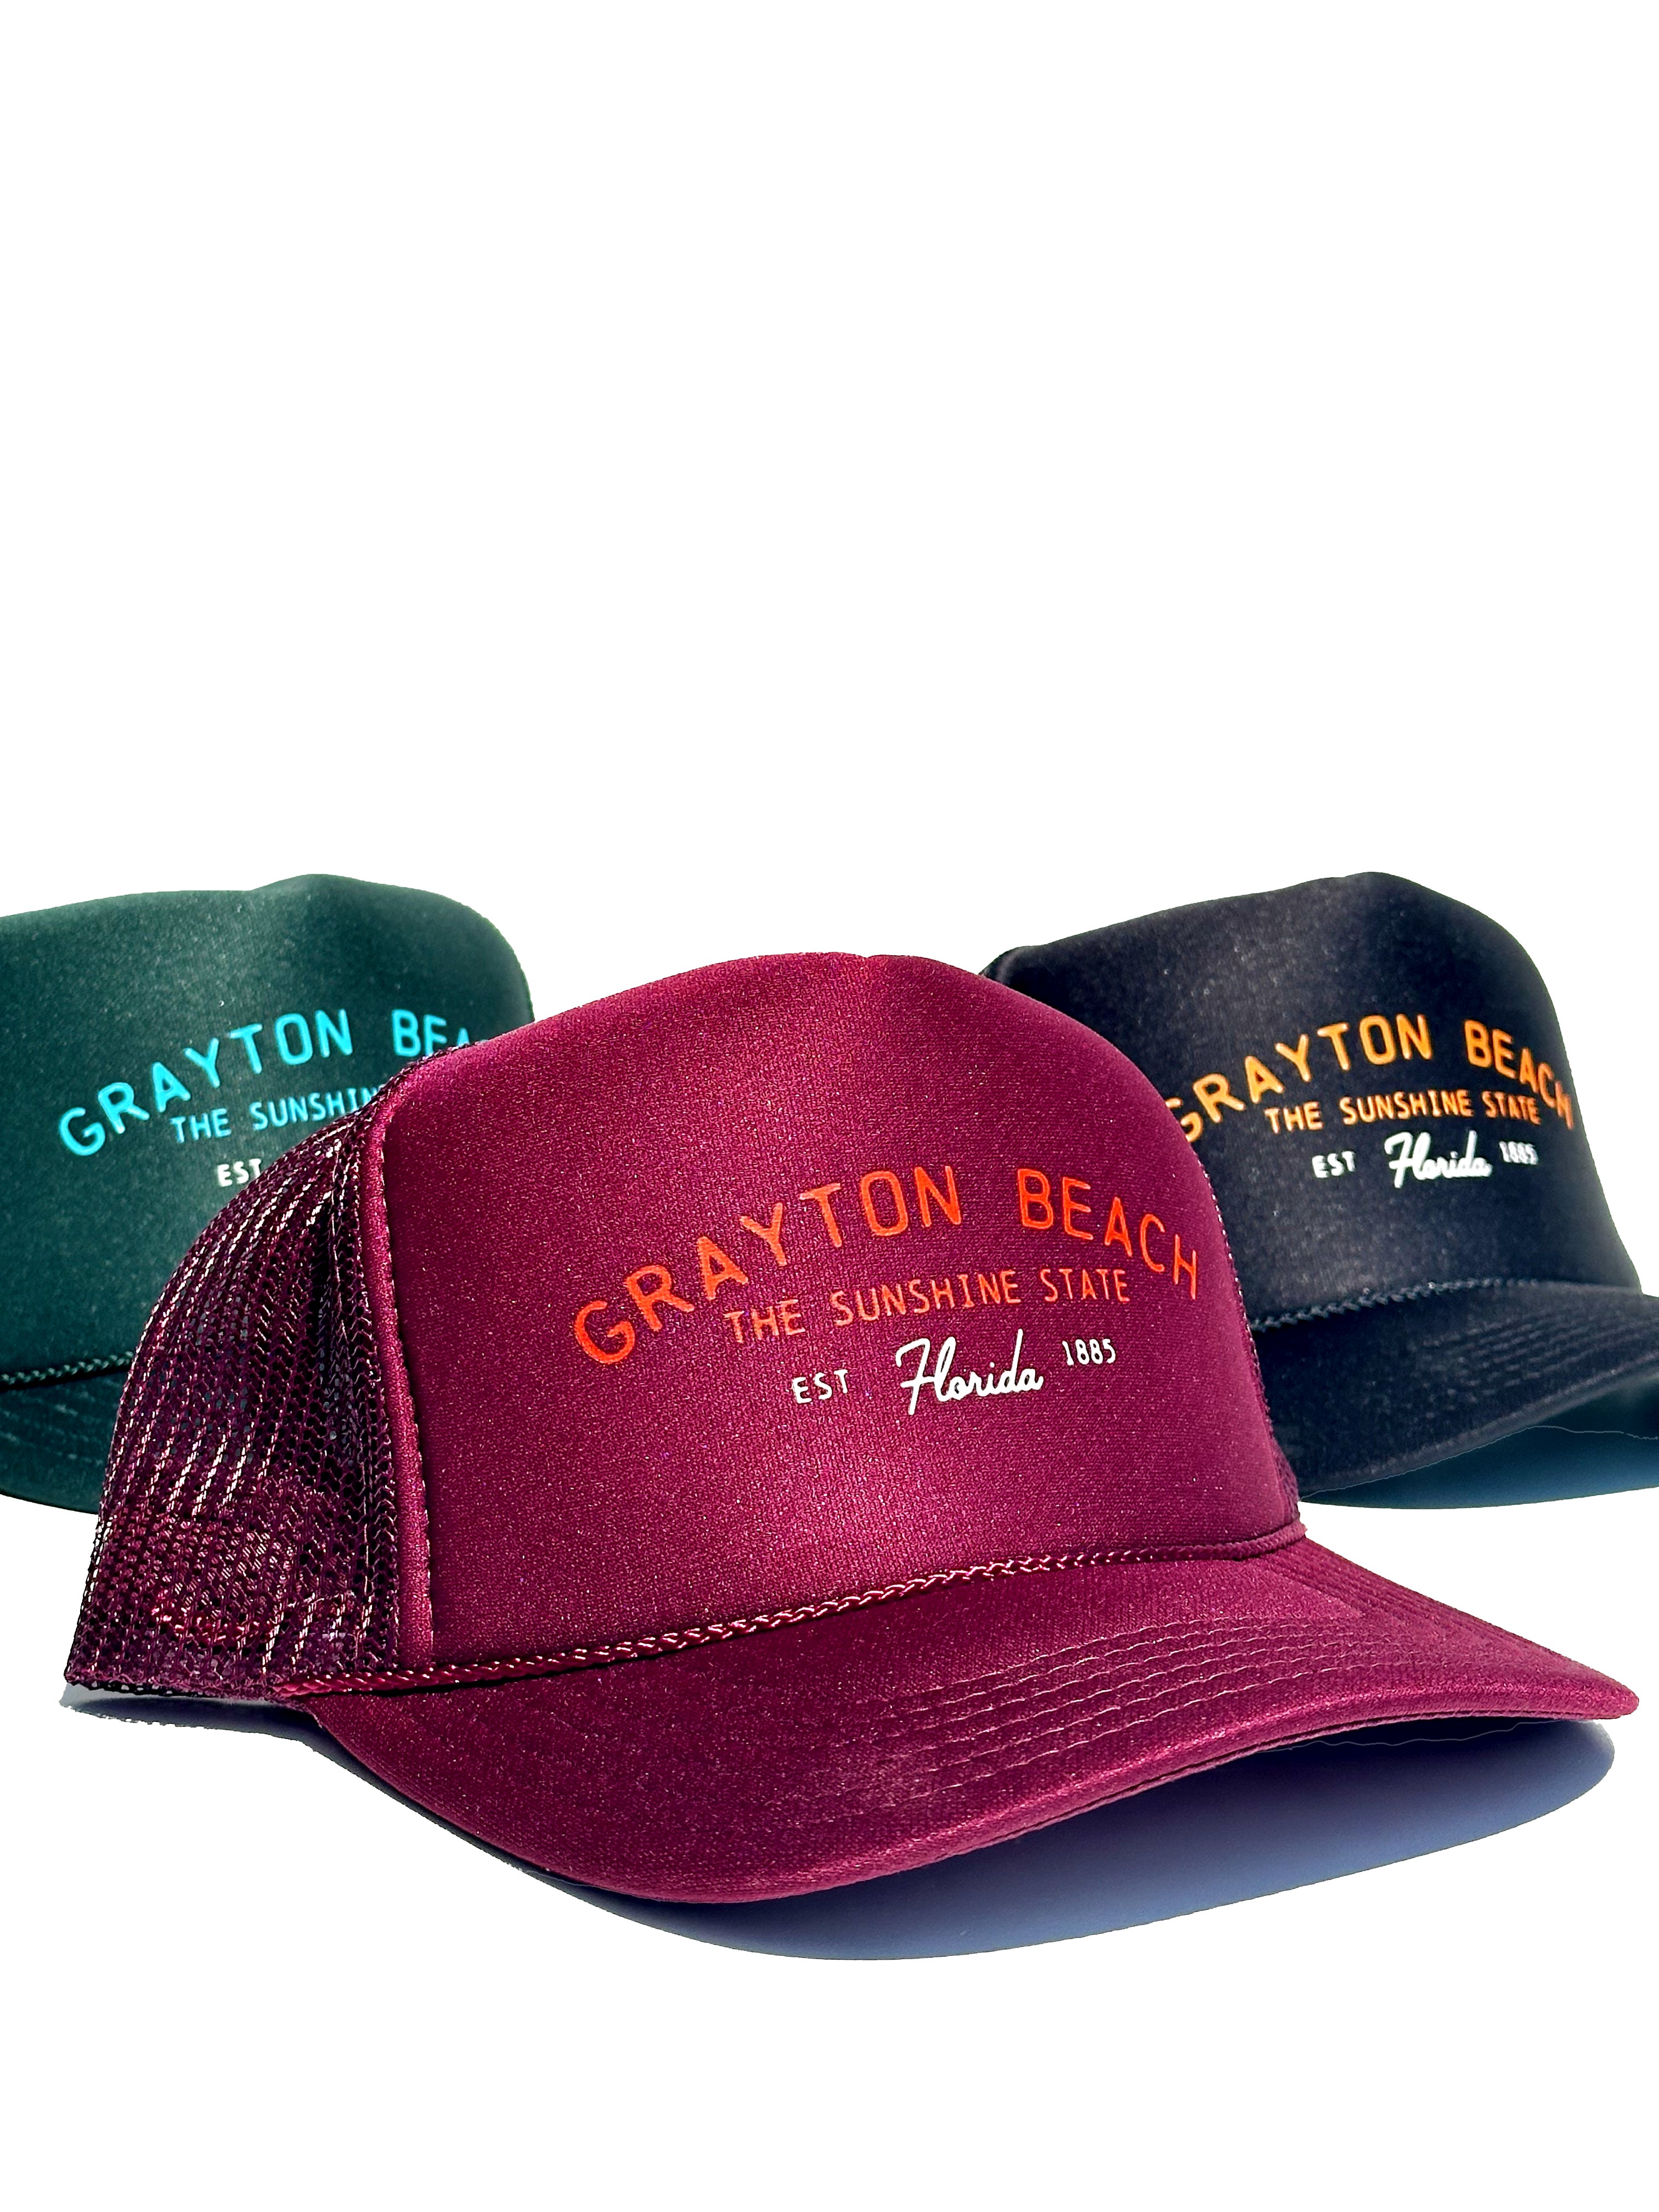 Grayton Beach Trucker Hat